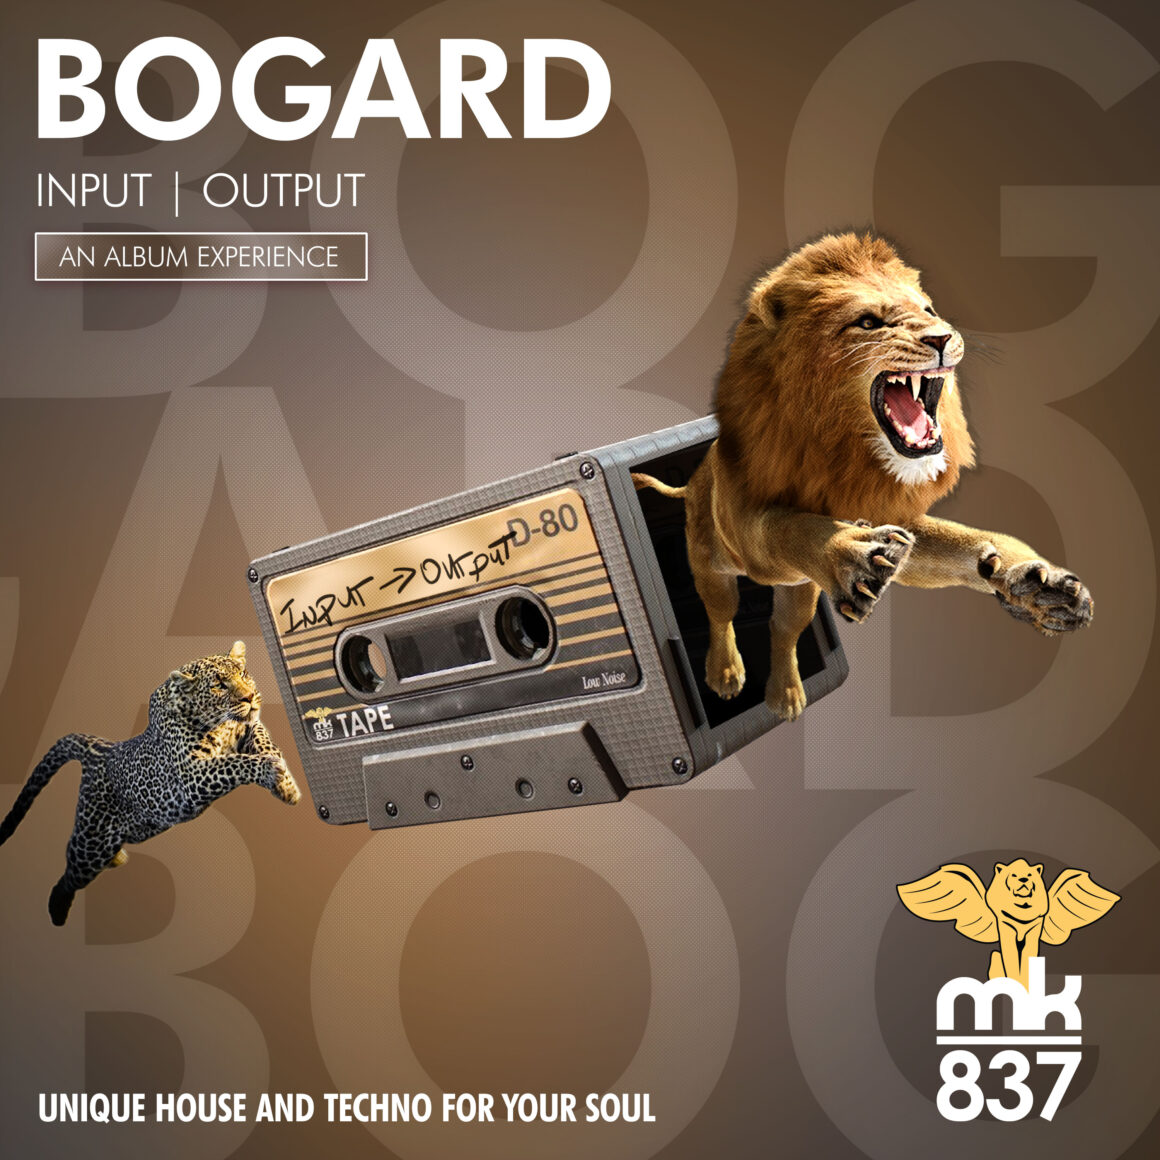 Bogard - Input | Output